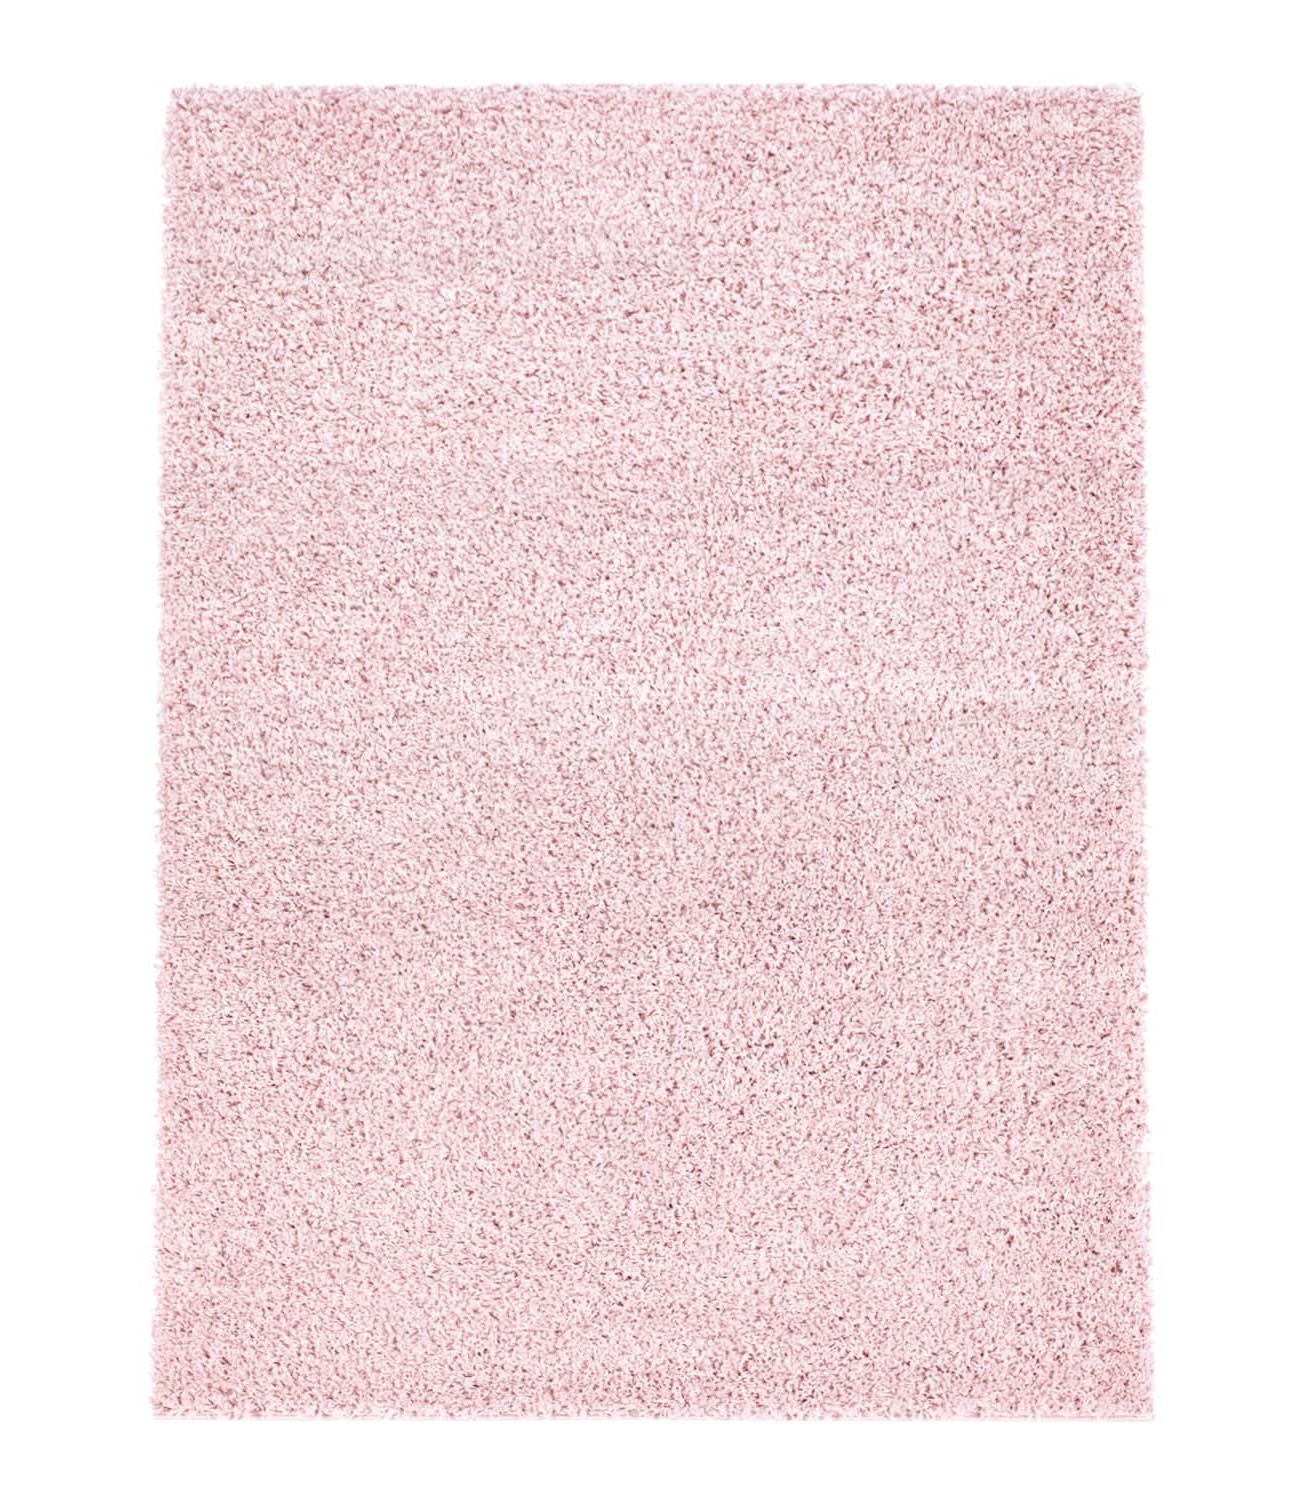 Trim ryatæppe rya tæppe rosa rund 60x120 cm 80x 150 cm 140x200 cm 160x230 cm 200x300cm